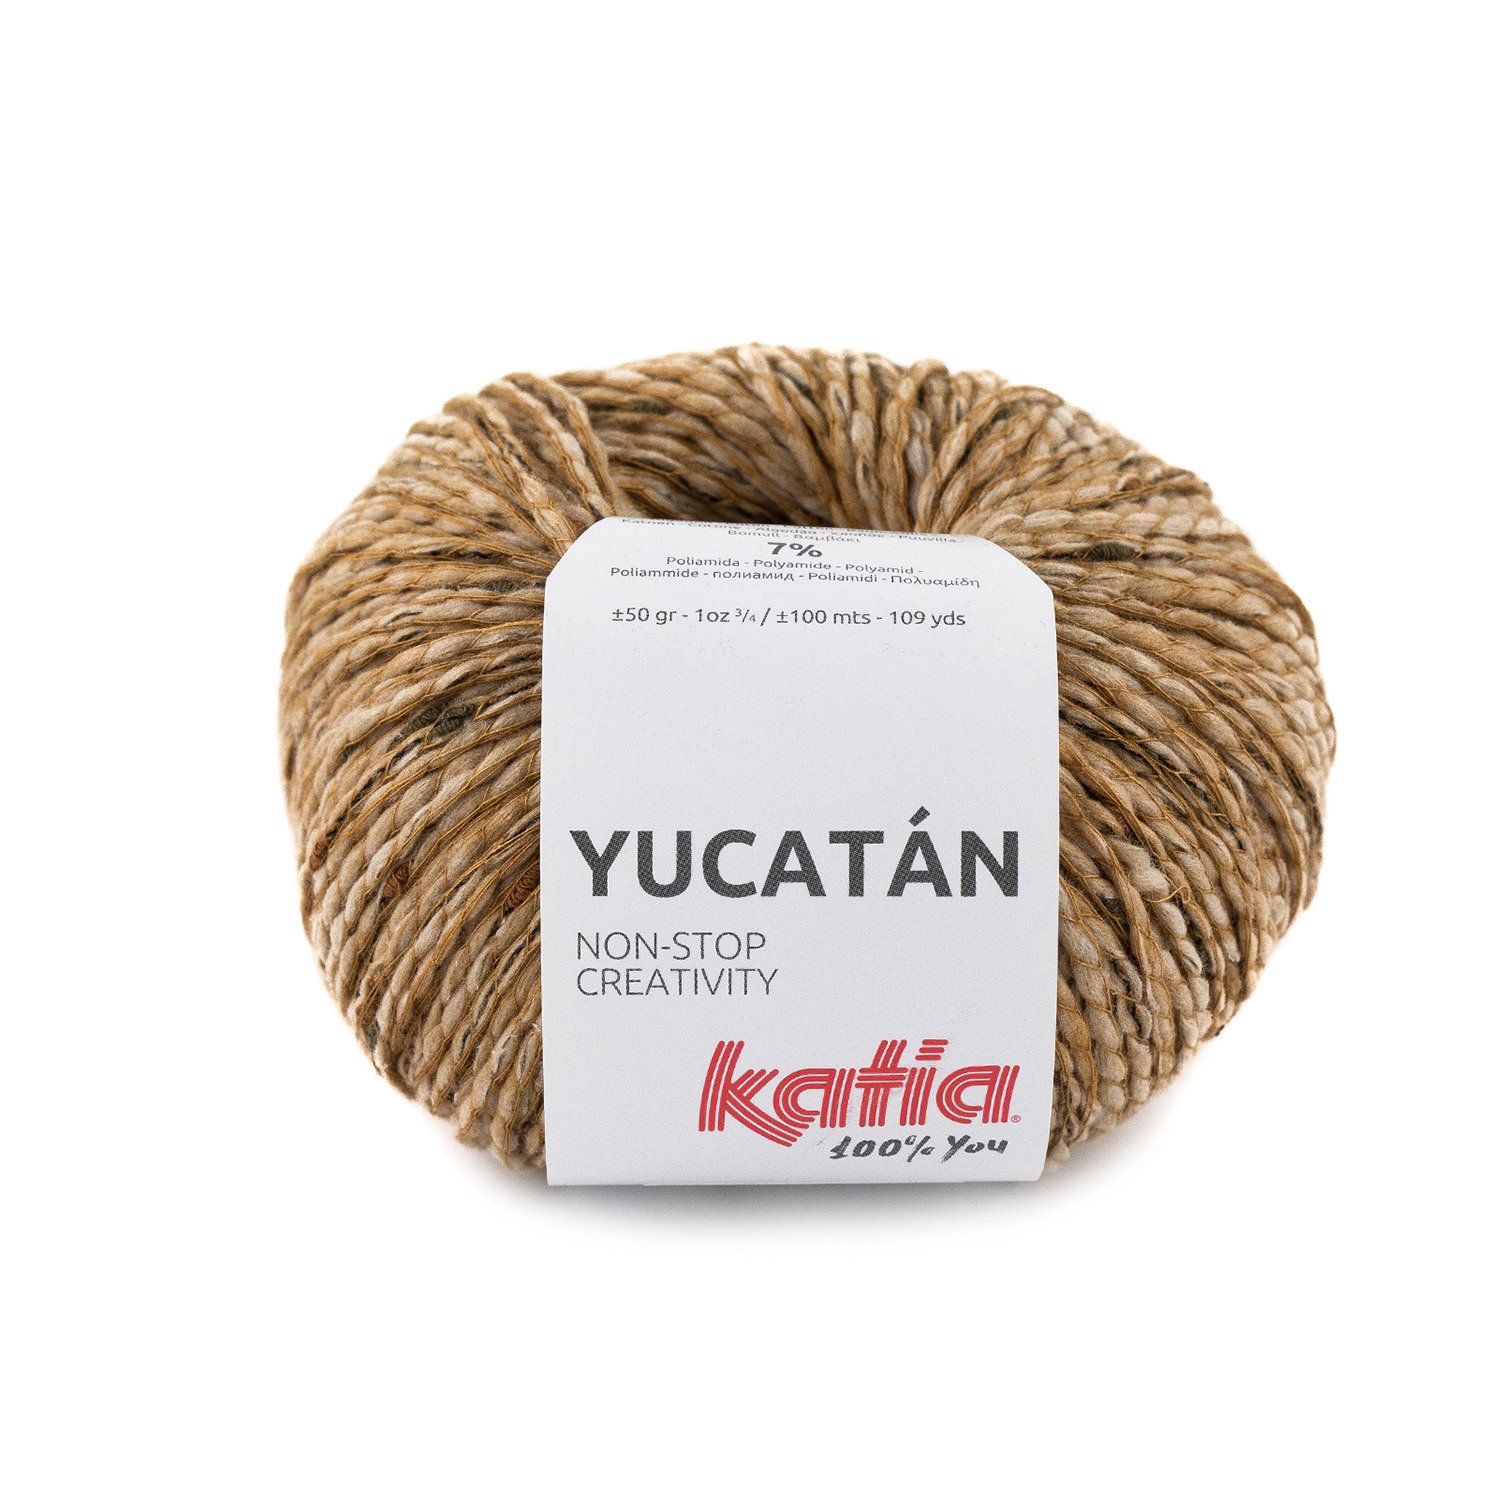 Katia Azteca - Fiber to Yarn